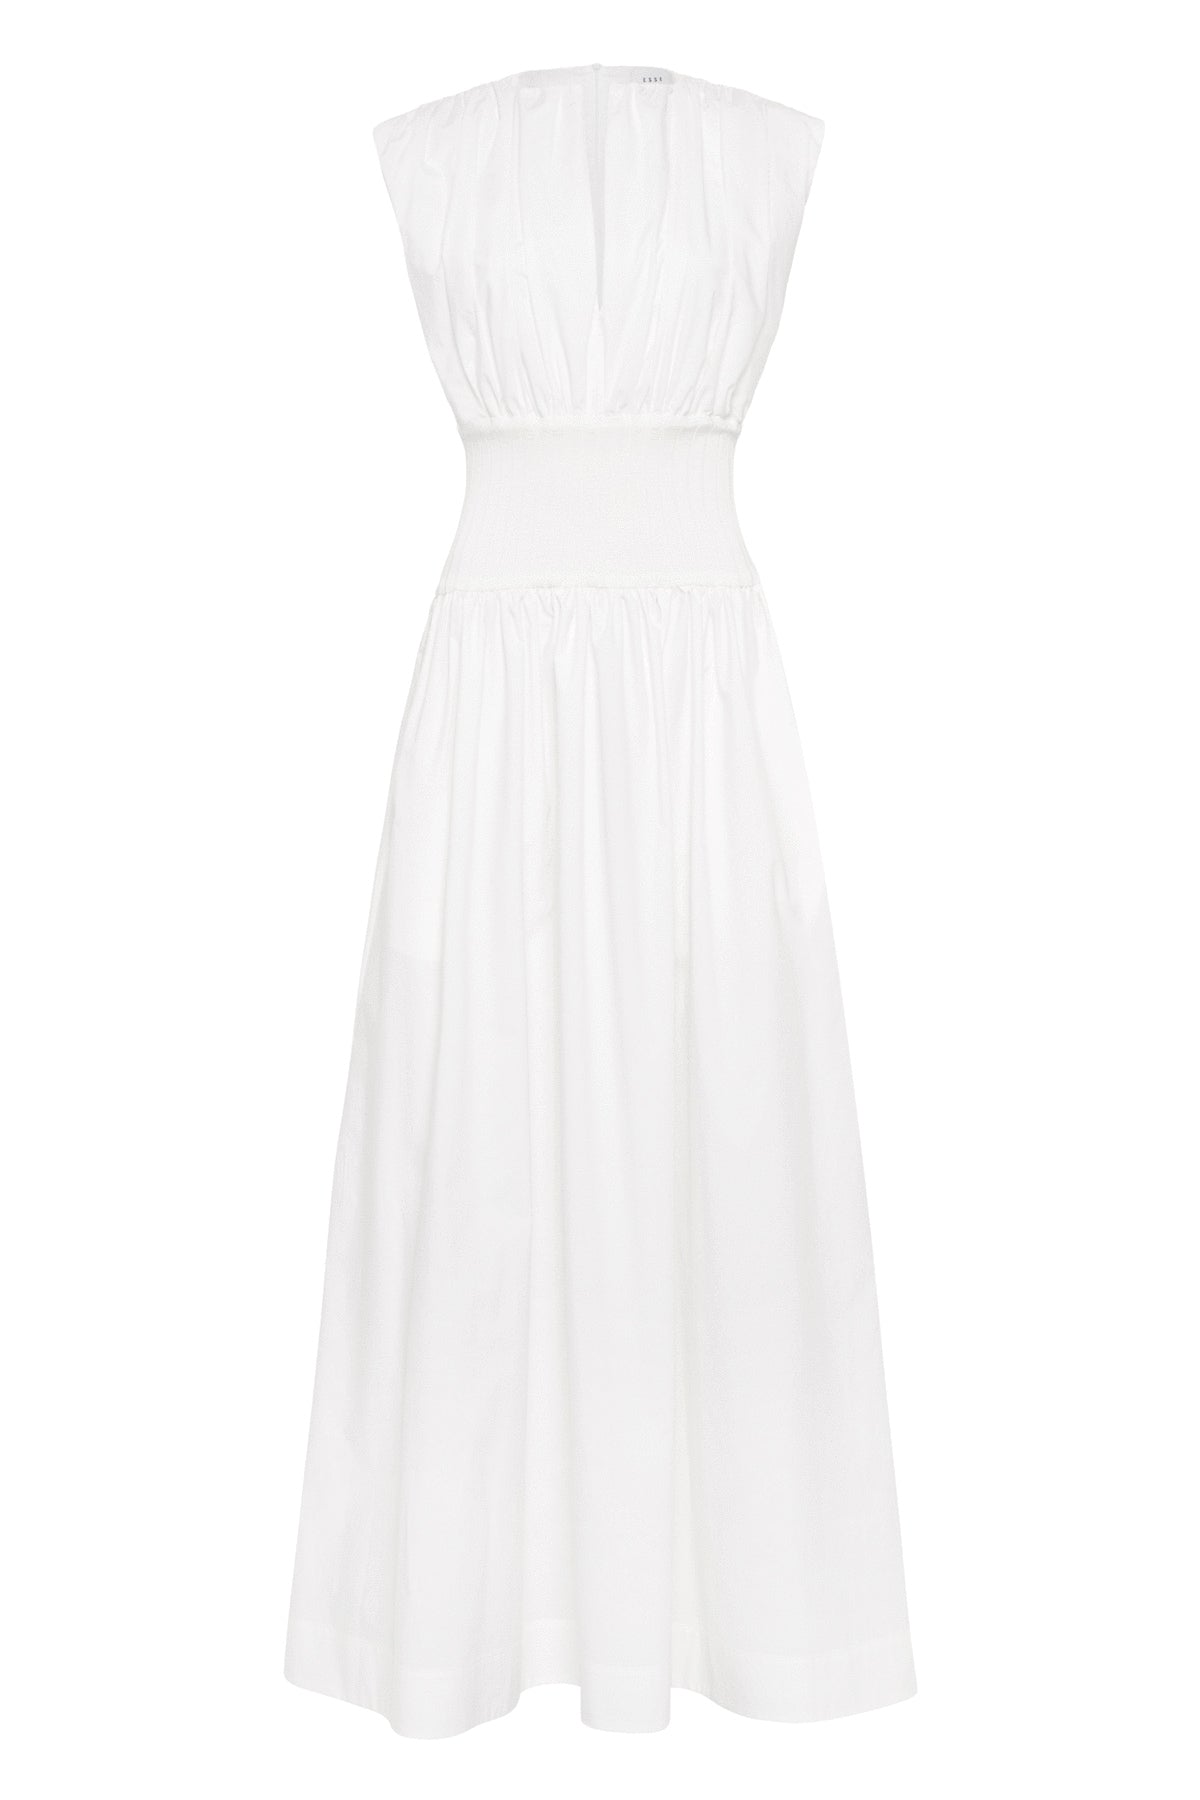 Cotton Rib Gathered Dress in Ivory - shop-olivia.com